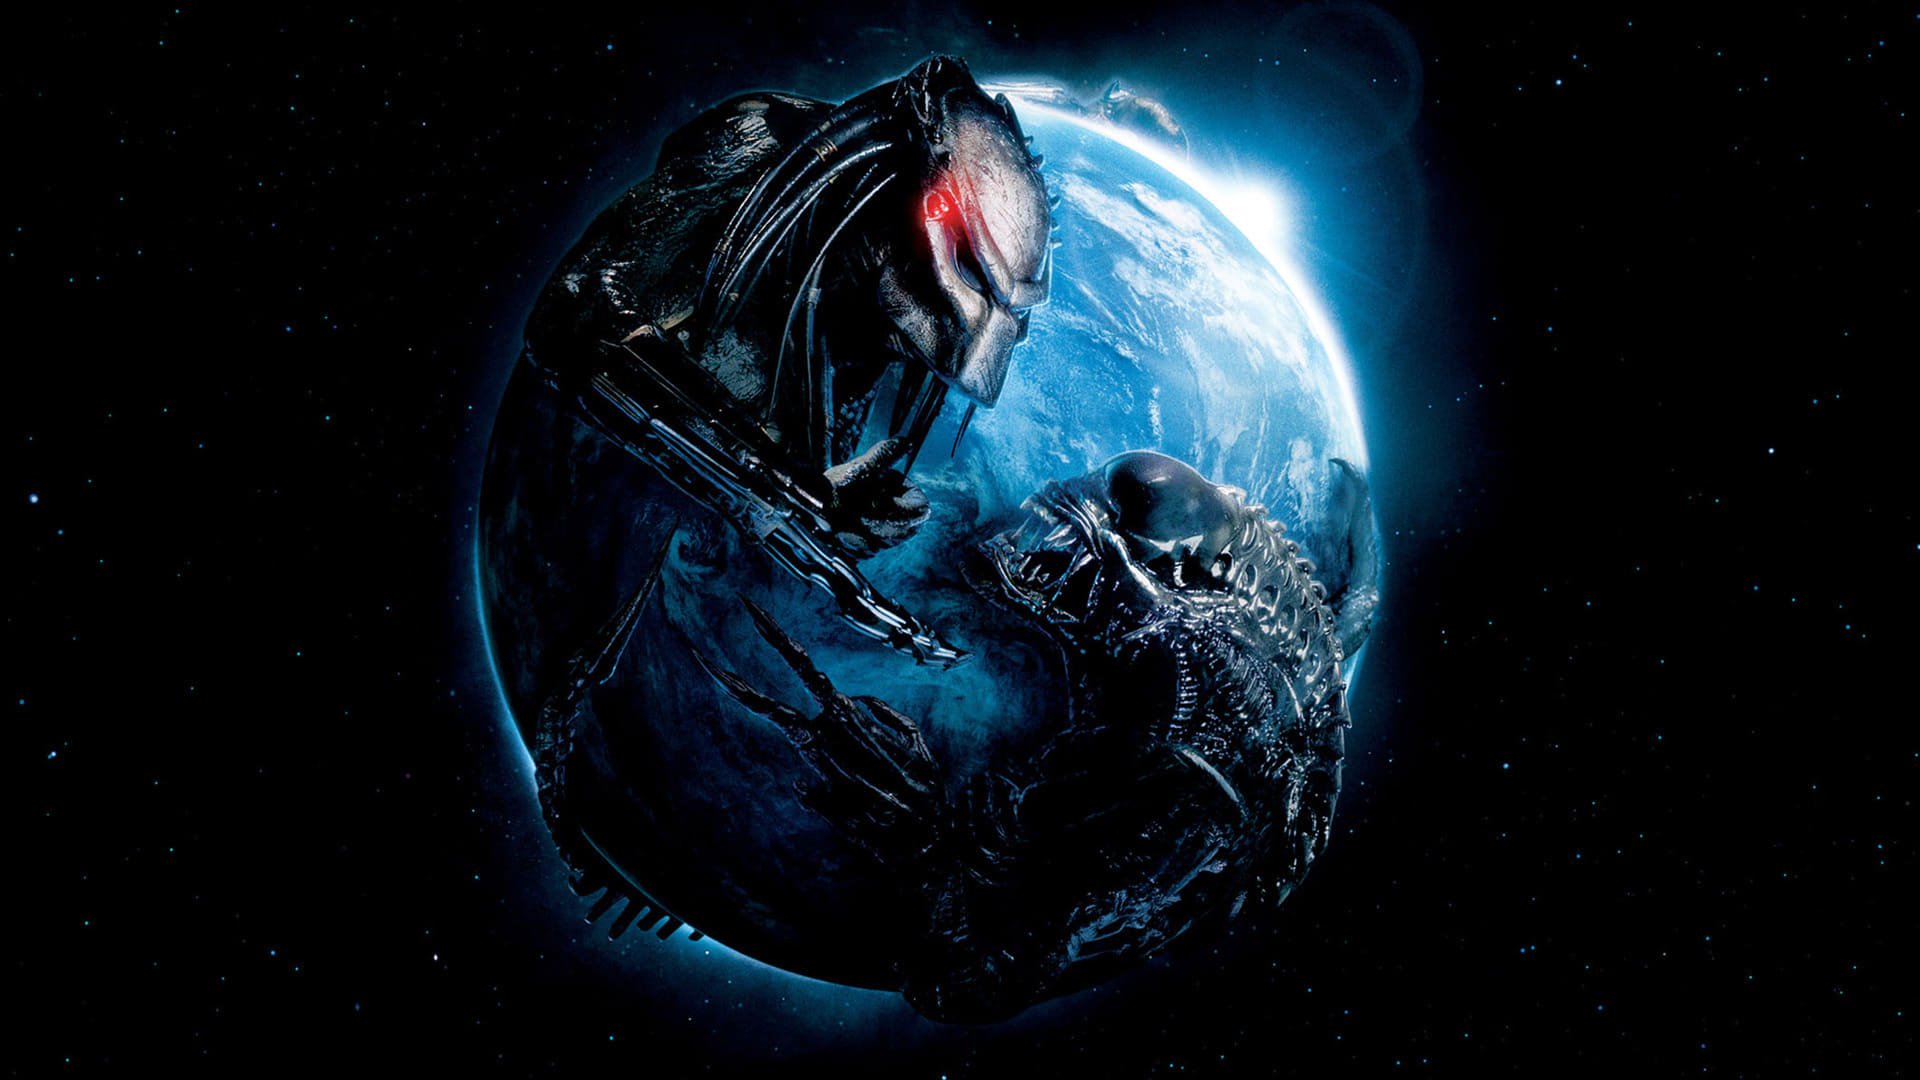 Pozadi k filmu Vetřelci vs. Predátor 2 / Aliens vs. Predator: Requiem rok 2007 